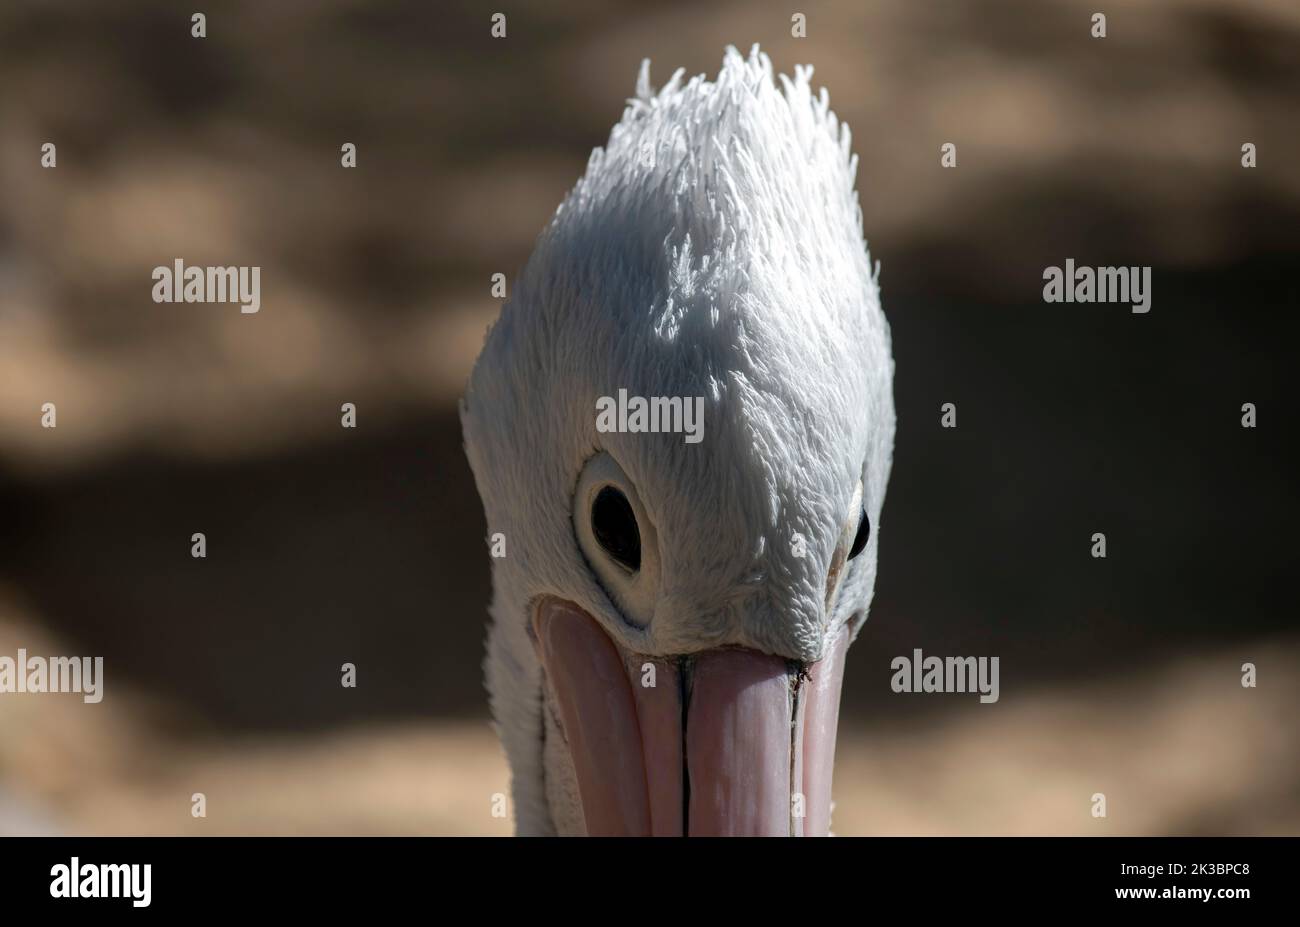 Close – up of an Australian Pelican (Pelecanus conspicillatus) in Sydney, NSW, Australia (Photo by Tara Chand Malhotra) Stock Photo